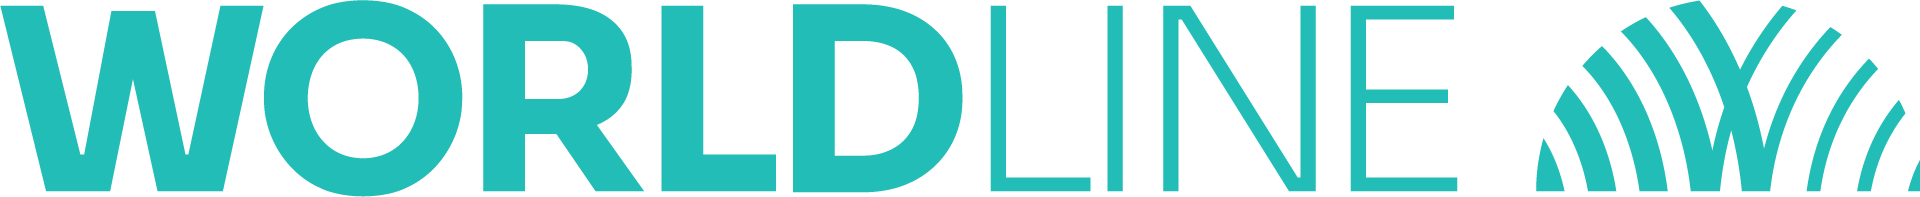 WL_logo_turquoise